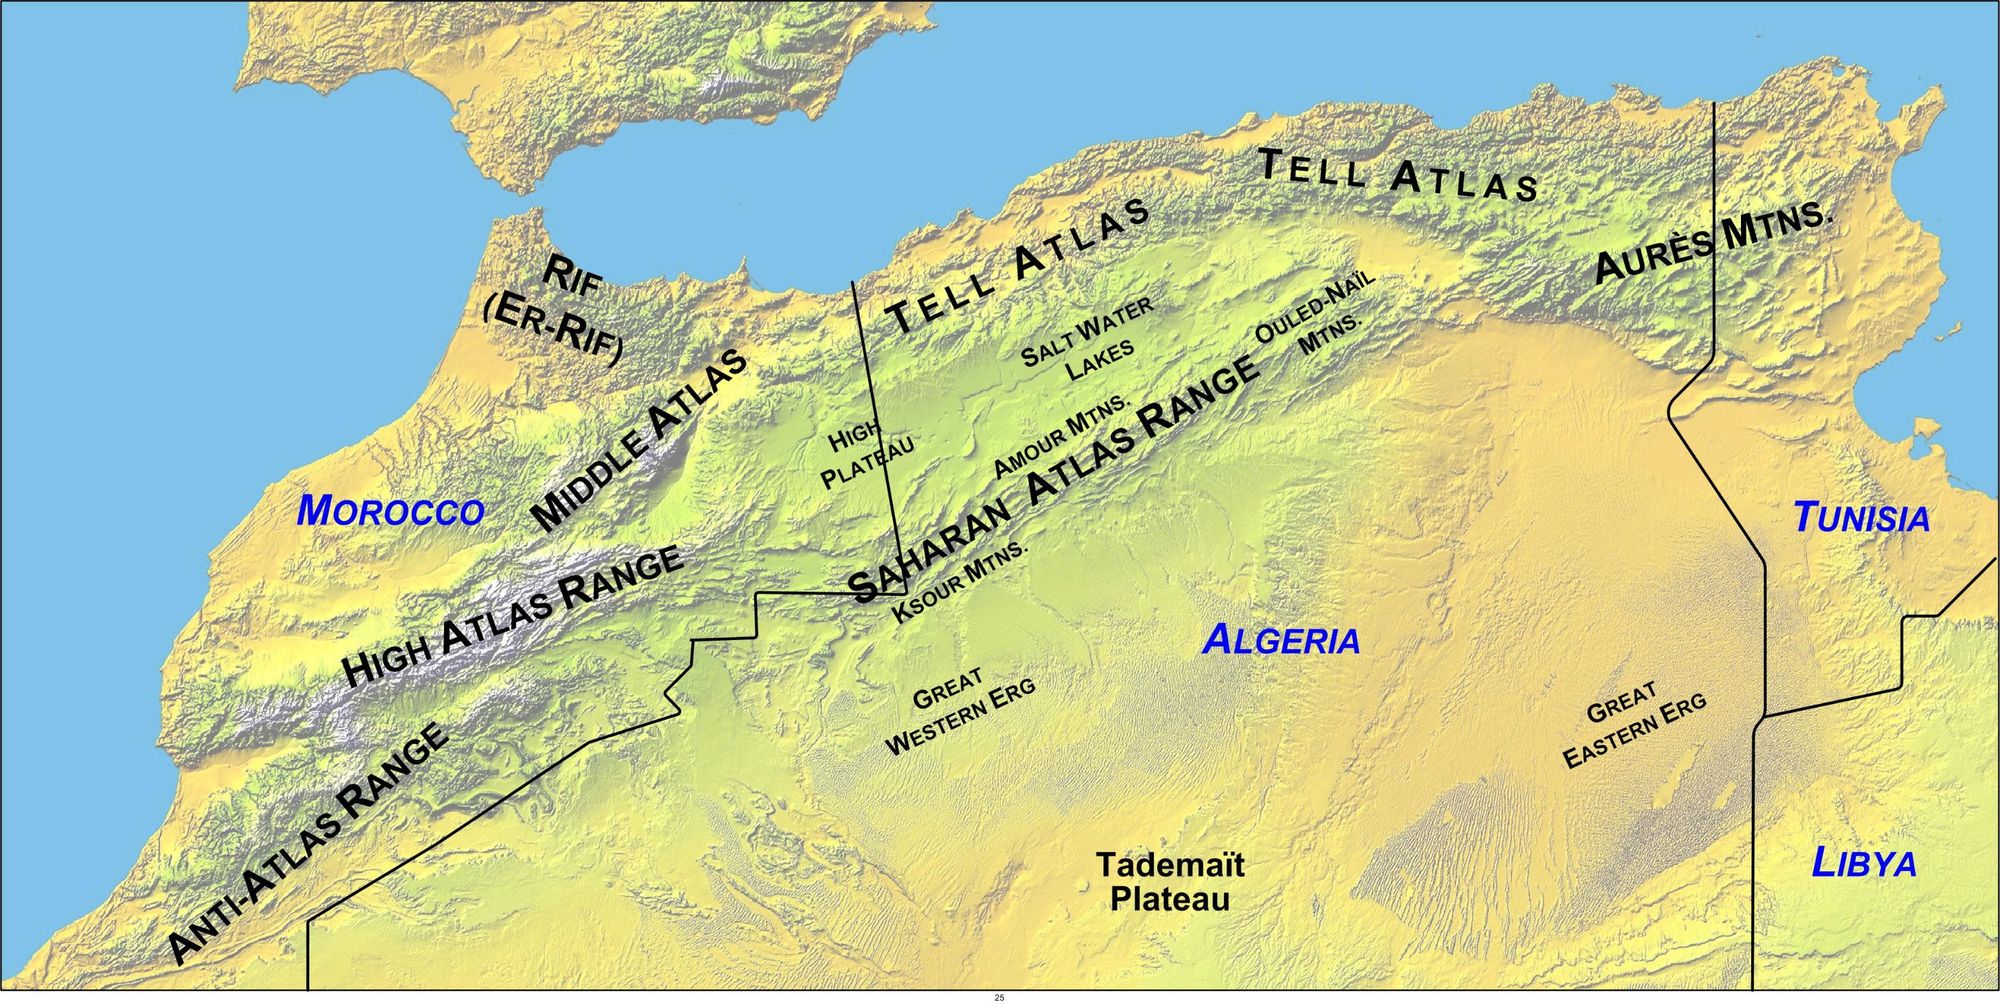 A map of the Atlas Mountains in Morocco, Algeria, and Tunisia.